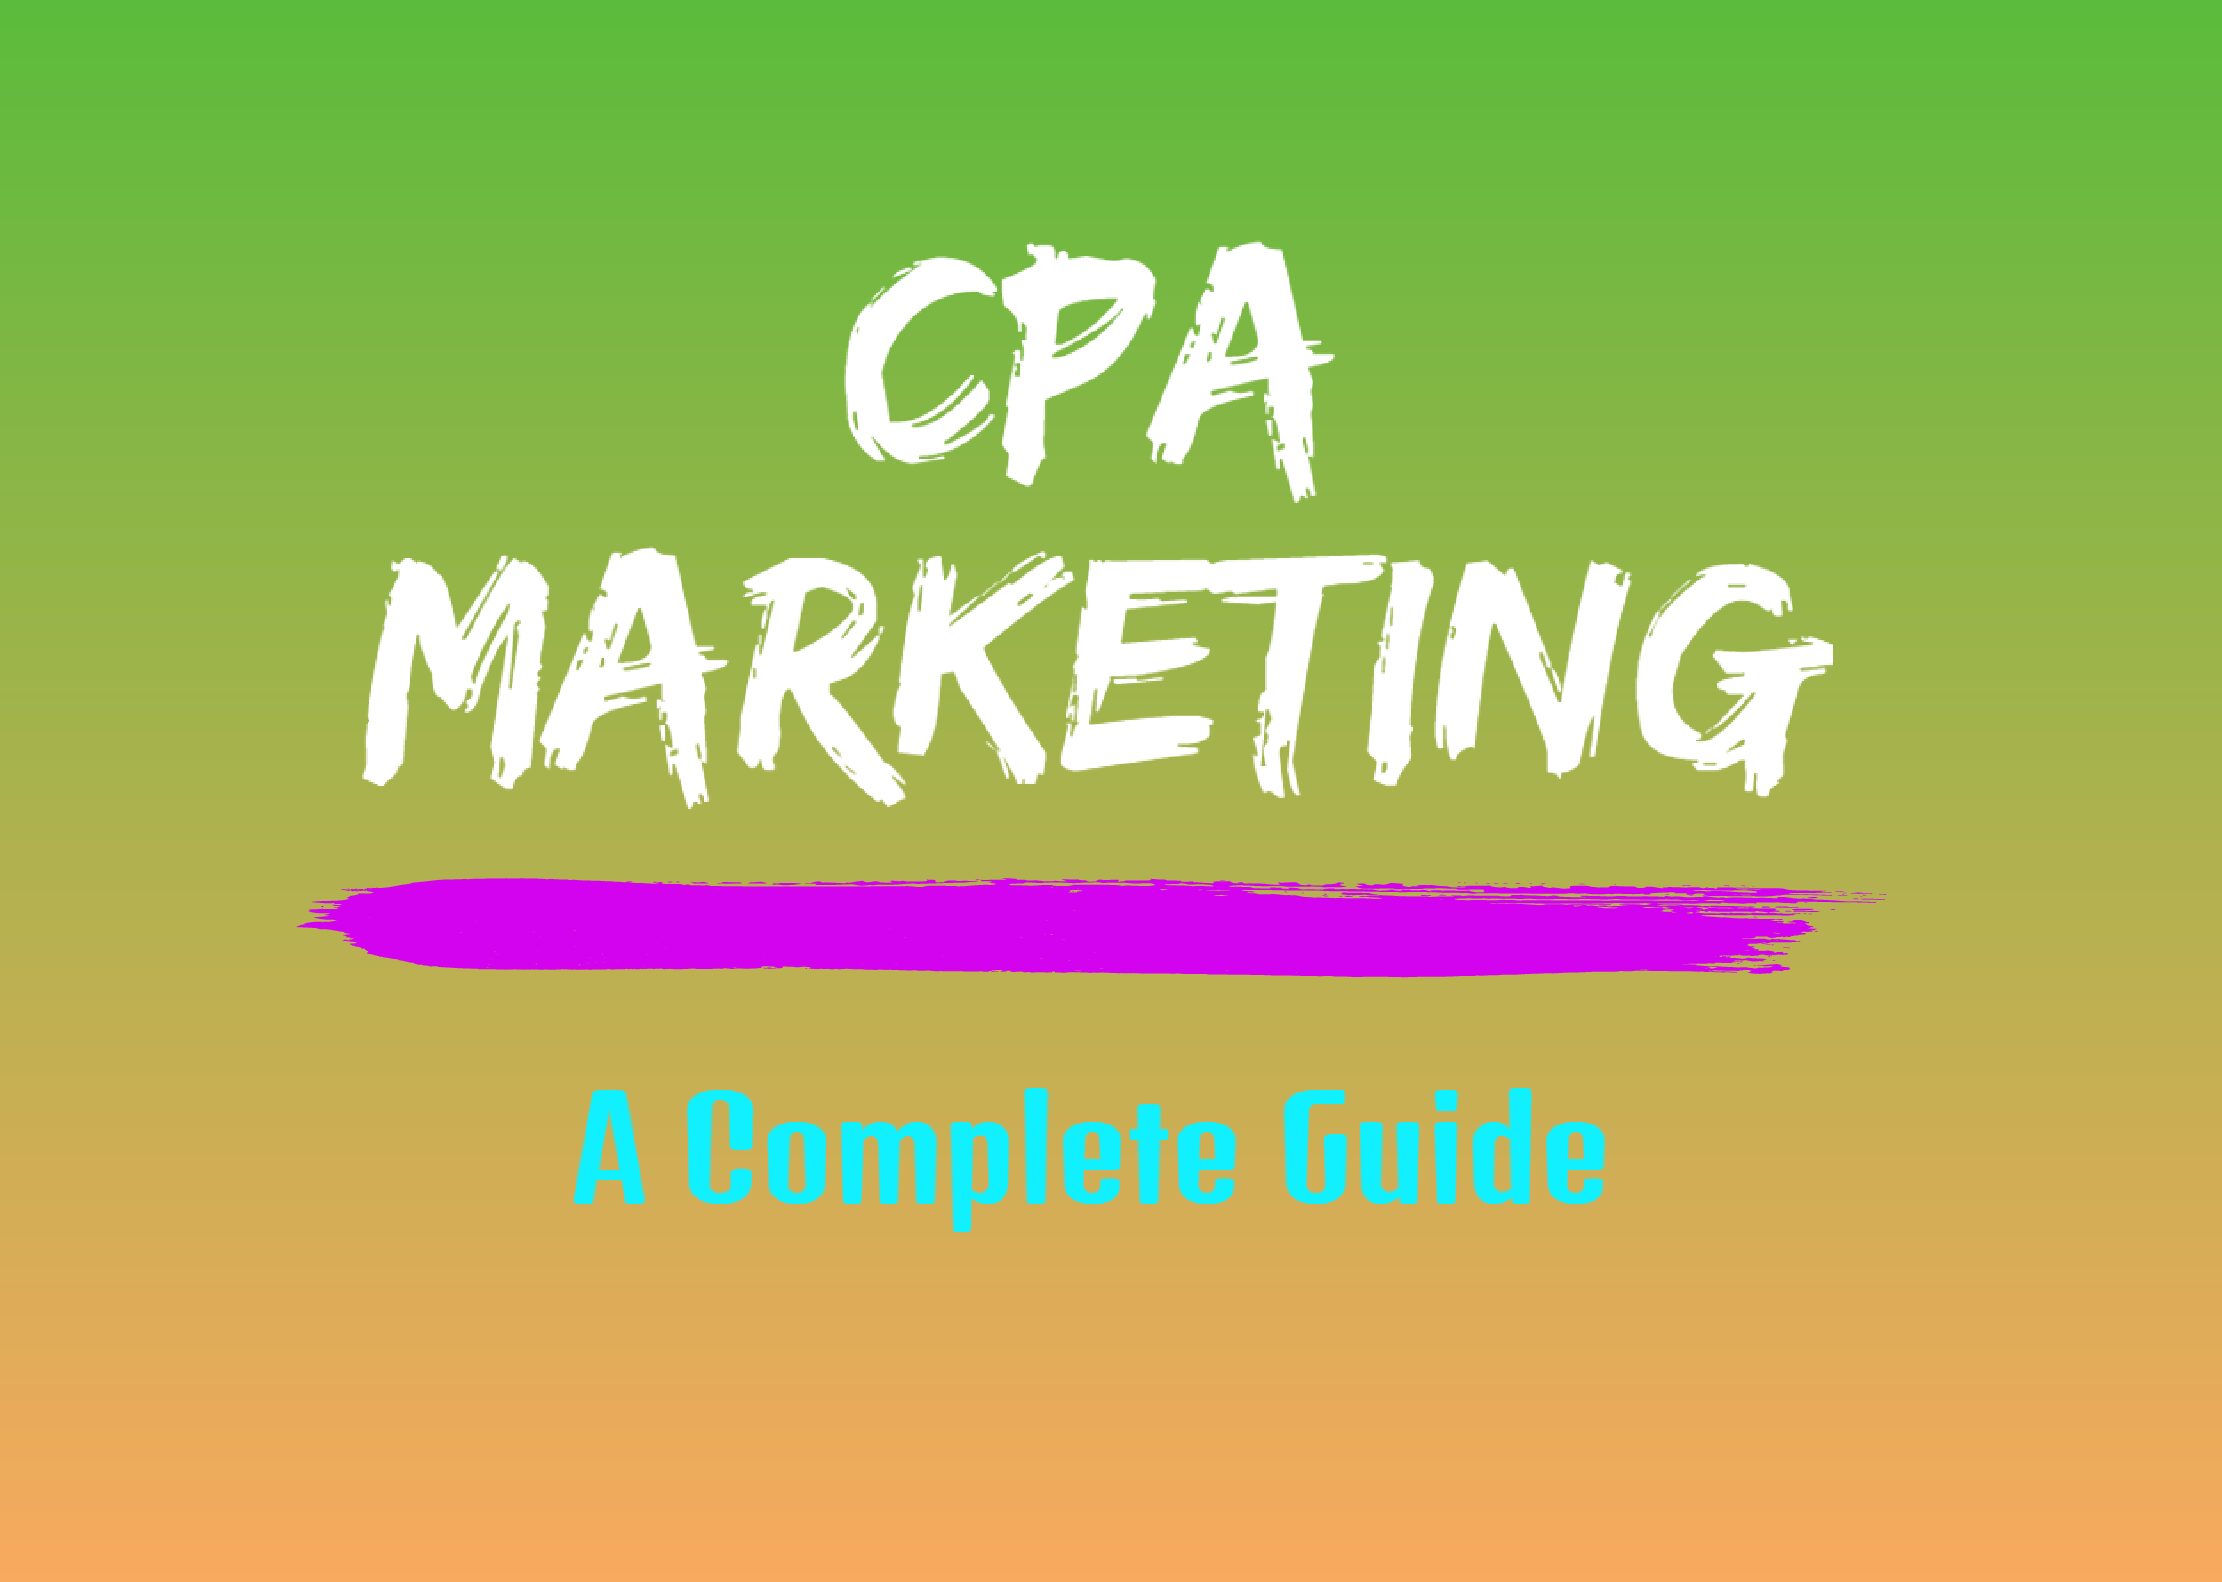 cpa marketing network last pdf